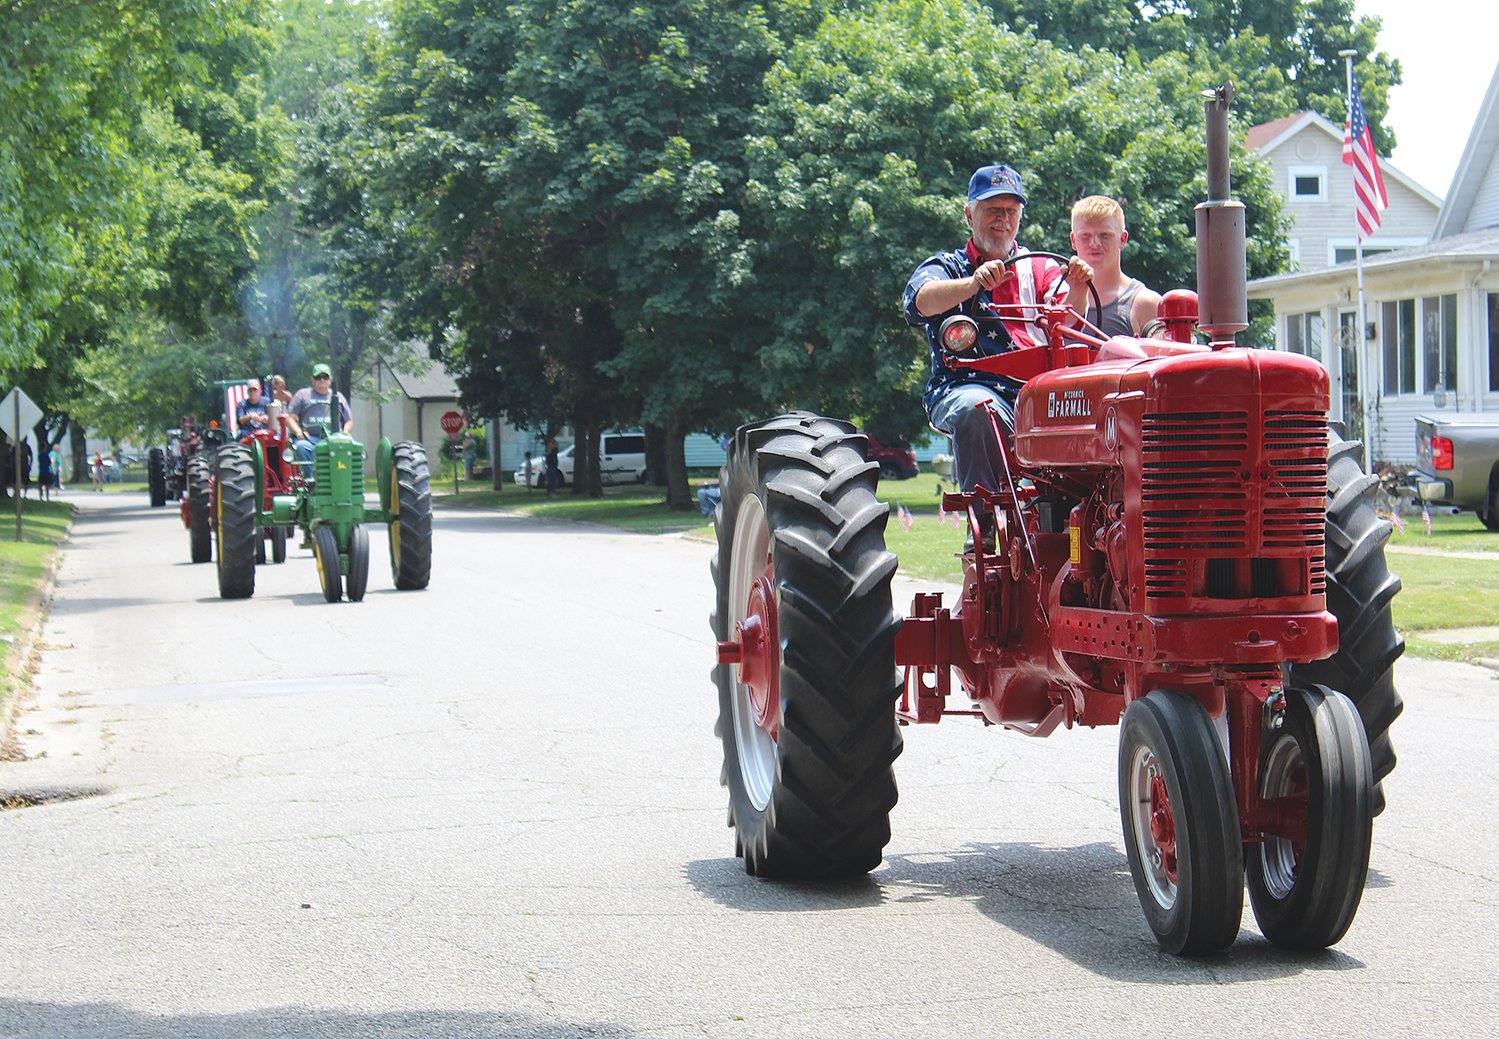 Several tractors were a part of Saturday's parade.